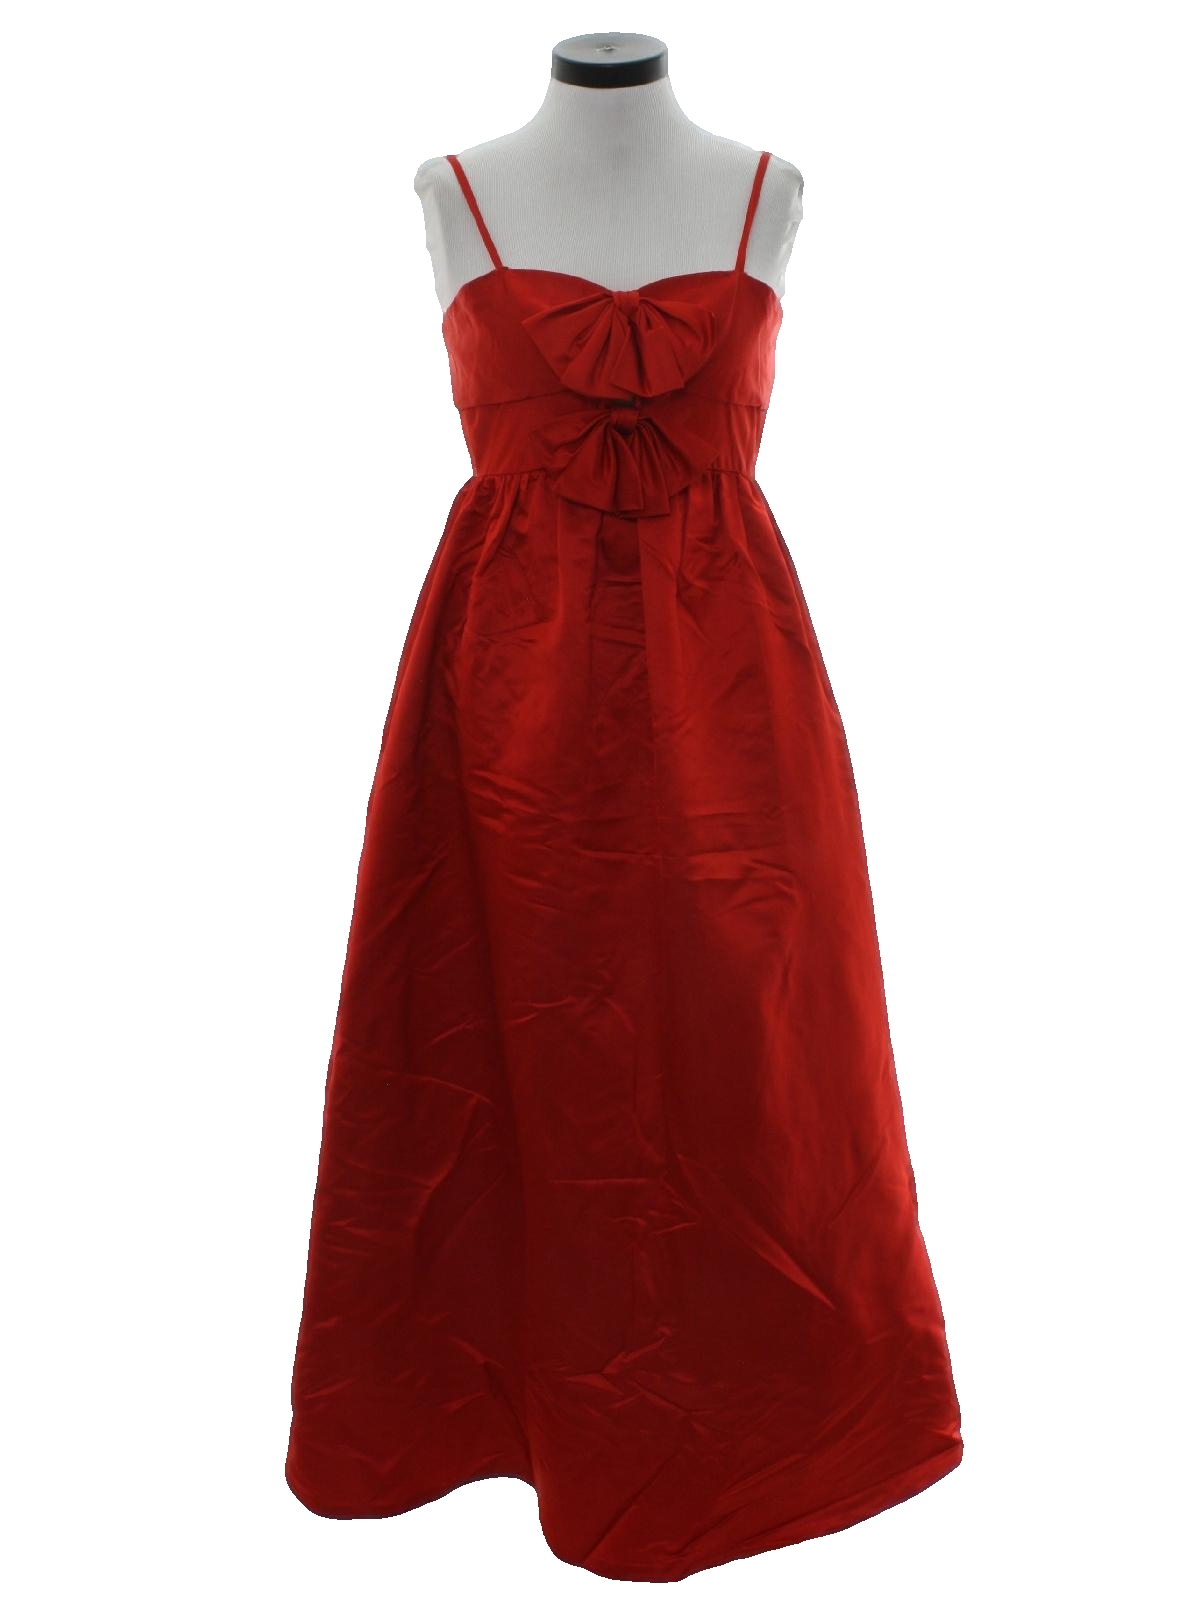 Retro 1960's Cocktail Dress (Victoria Royal Ltd.) : 60s -Victoria Royal ...